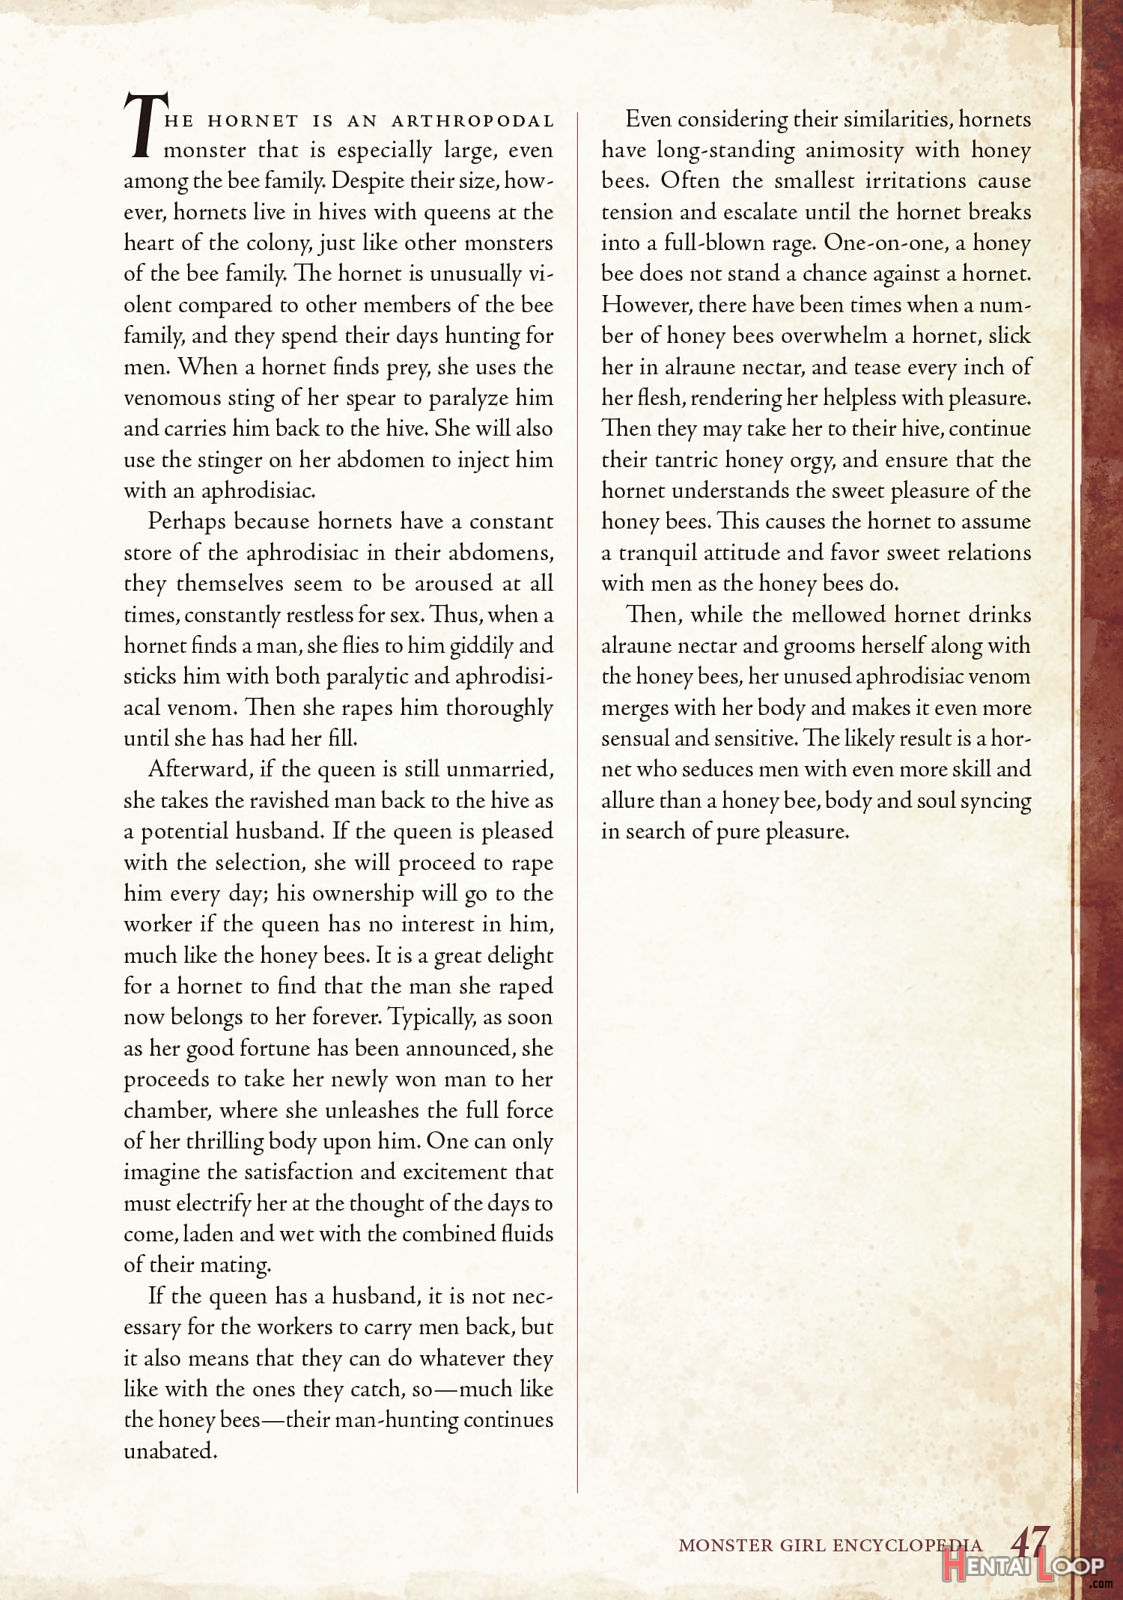 Monster Girl Encyclopedia Vol. 1 page 48